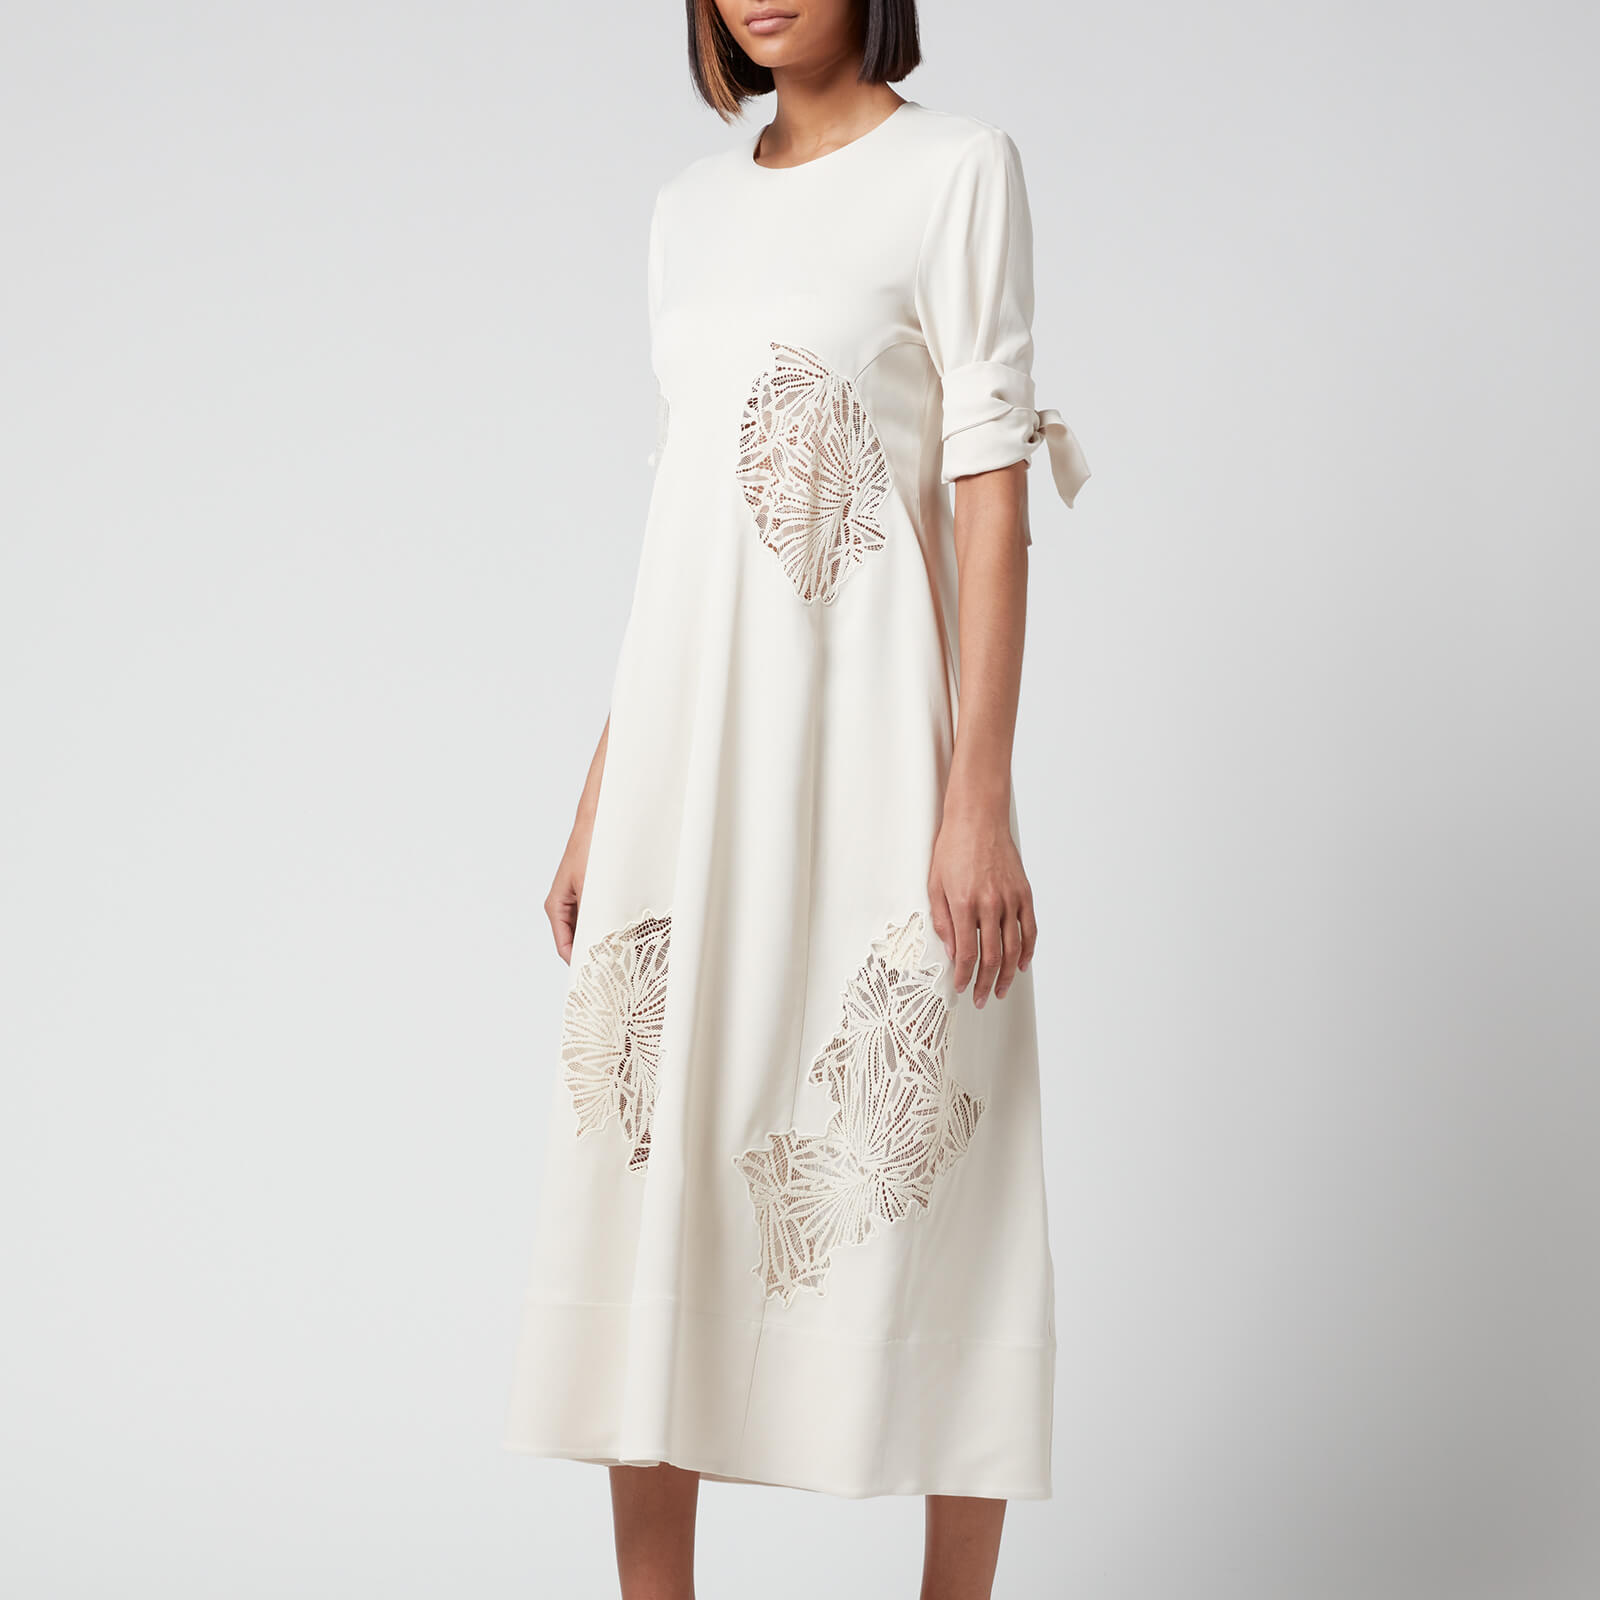 Proenza Schouler Women's Embroidered Matte Satin Dress - Ecru - US 6/UK 10